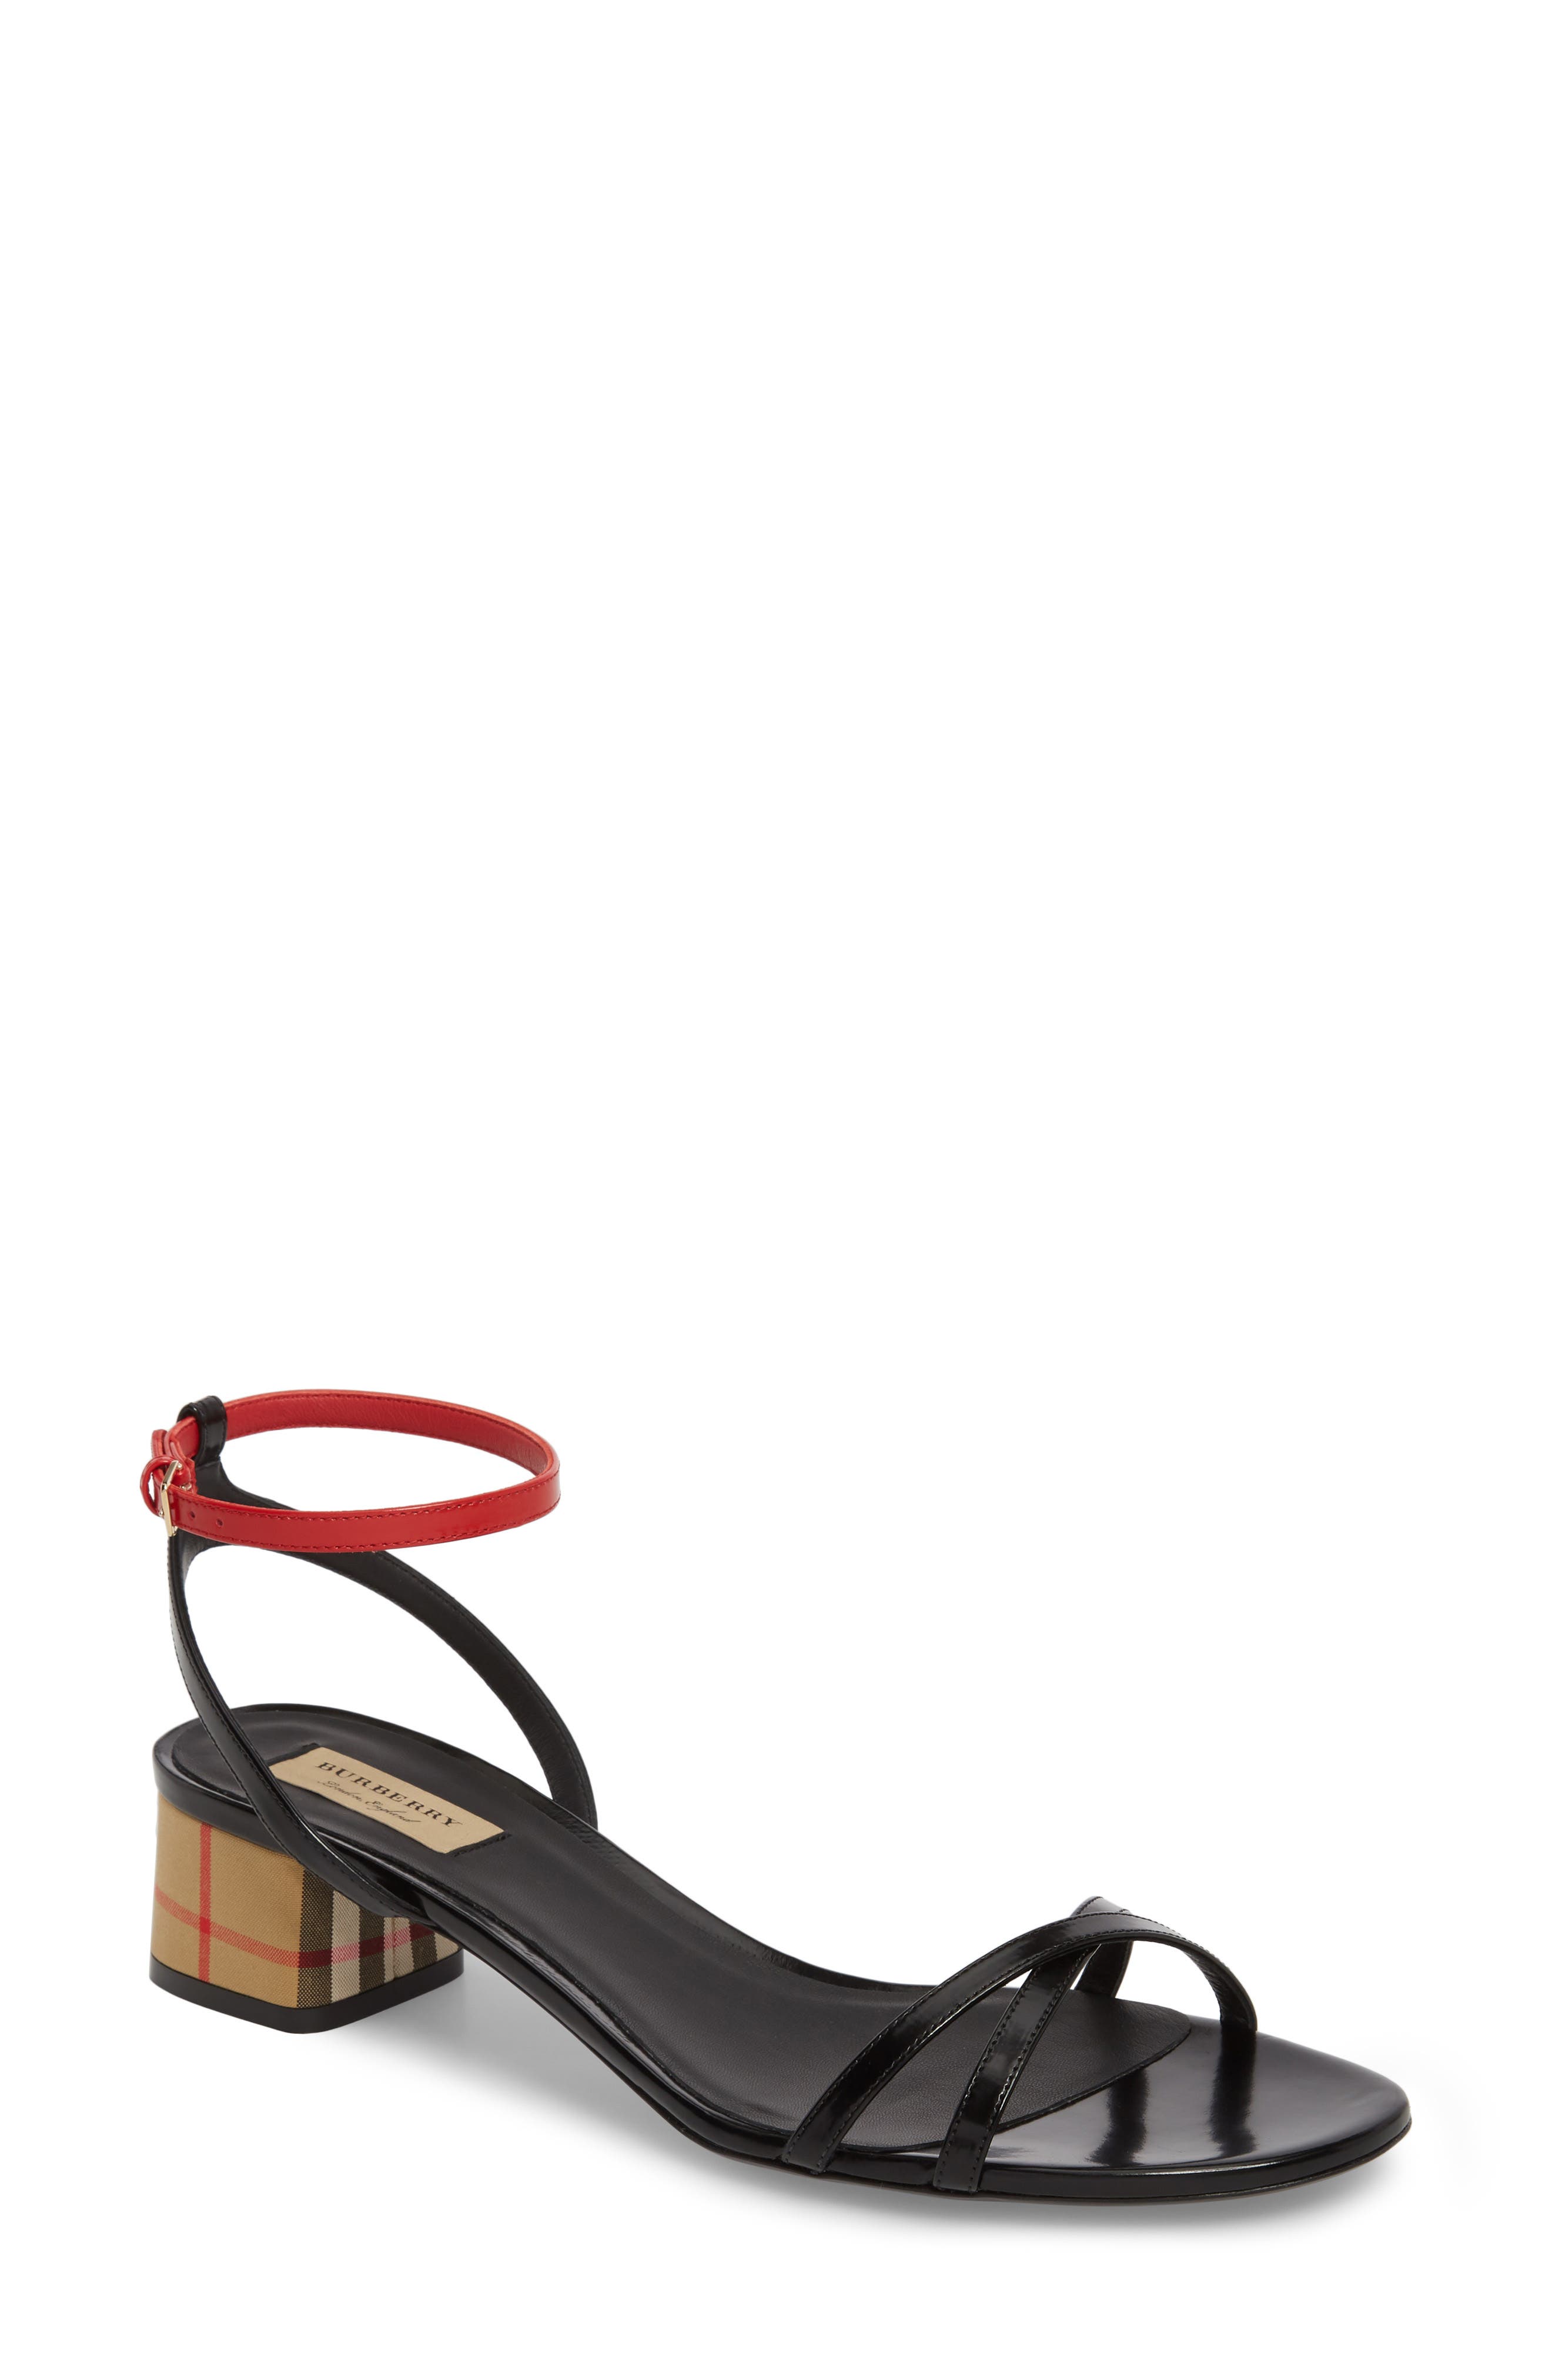 burberry sandals 2015